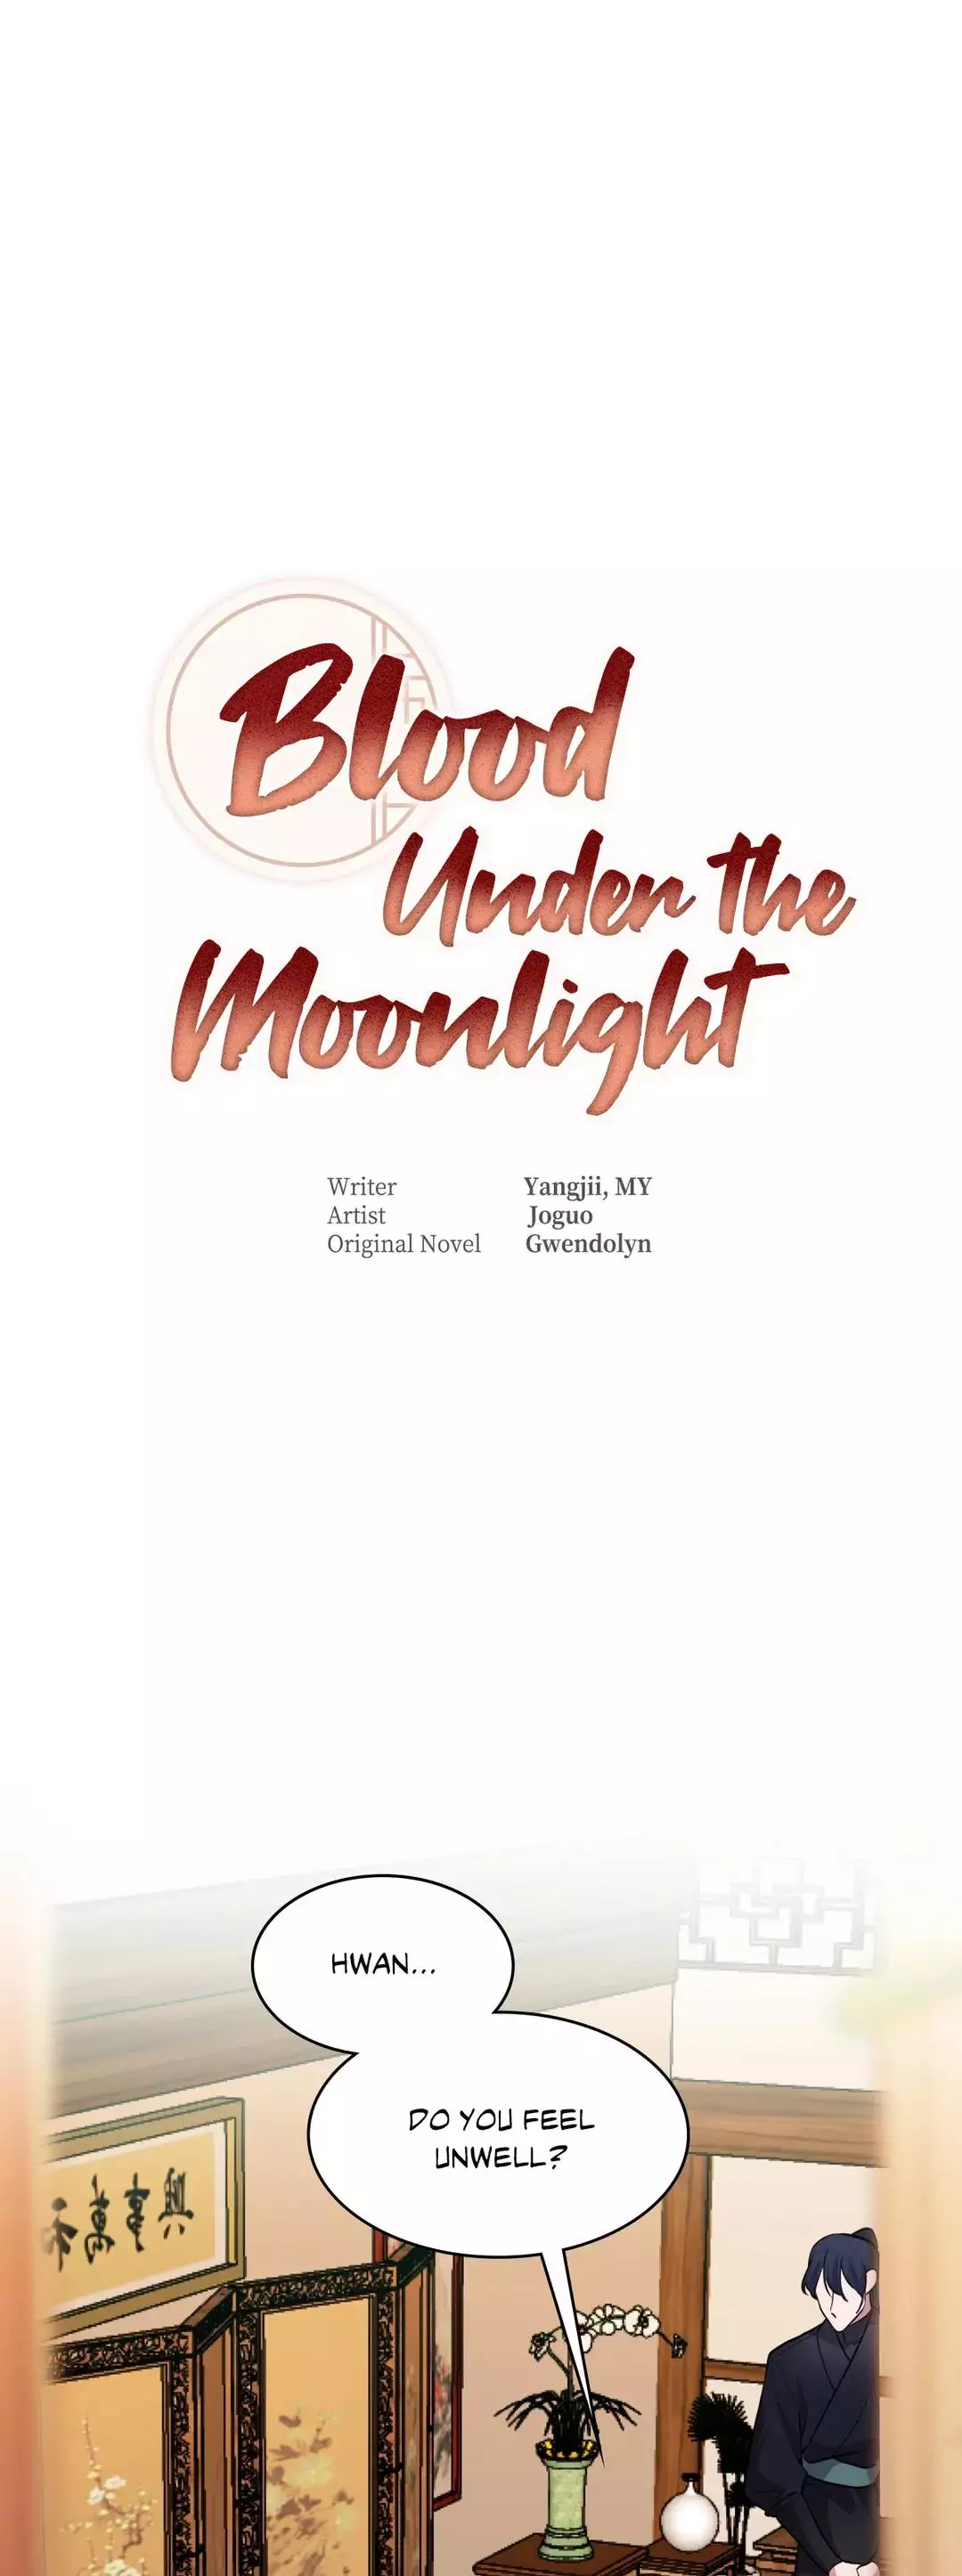 Midnight Dweller - 9 page 2-0c01be98